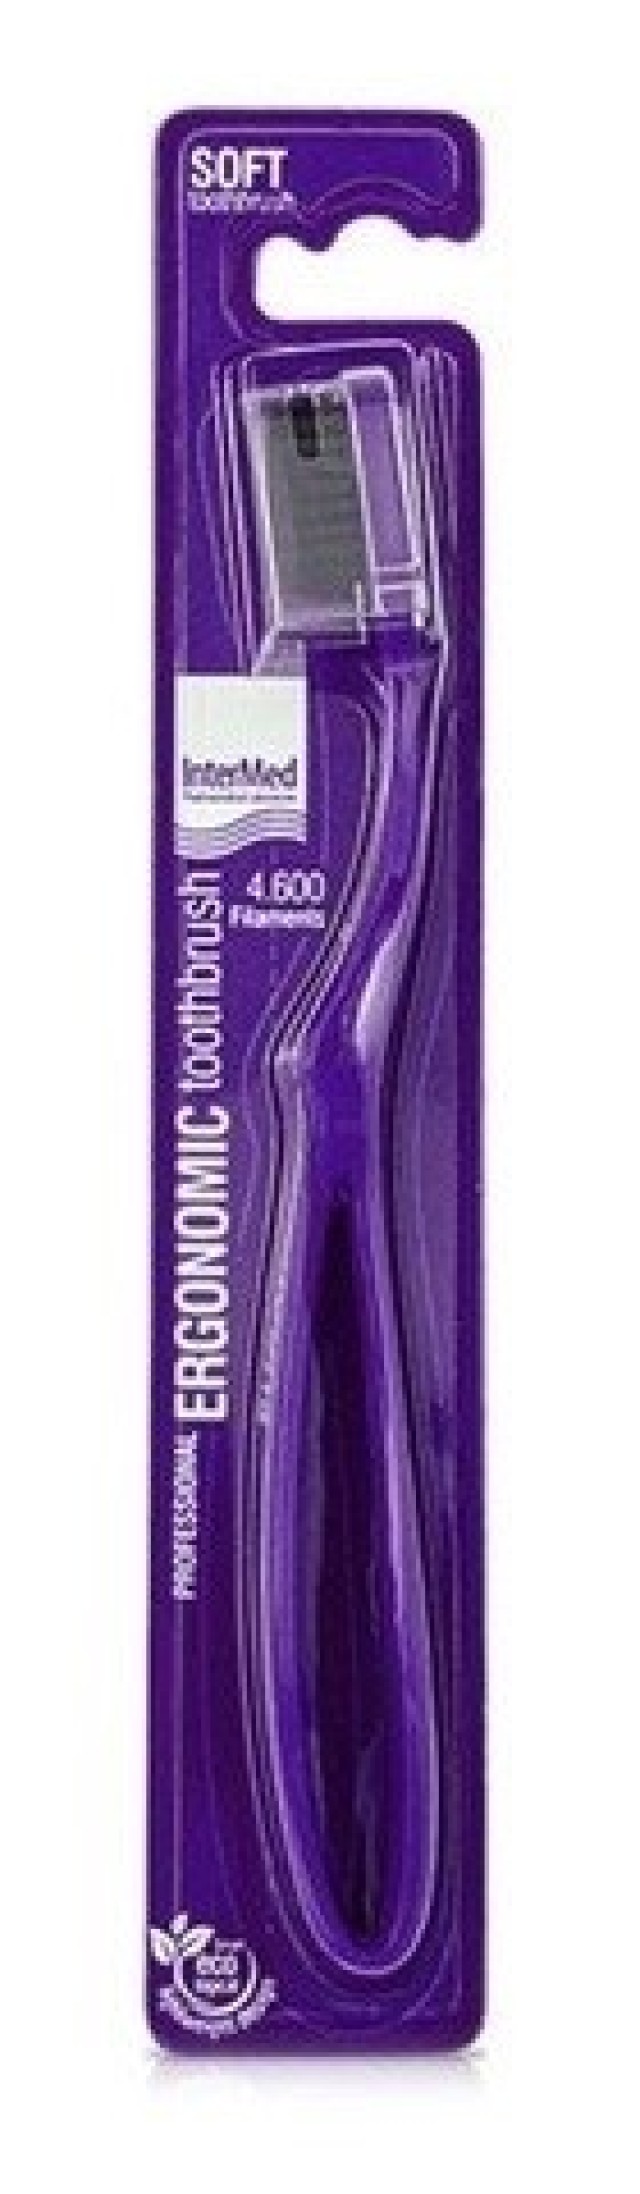 Intermed Professional Ergonomic Toothbrush Medium Οδοντόβουρτσα  Μωβ 3.270 Ίνες